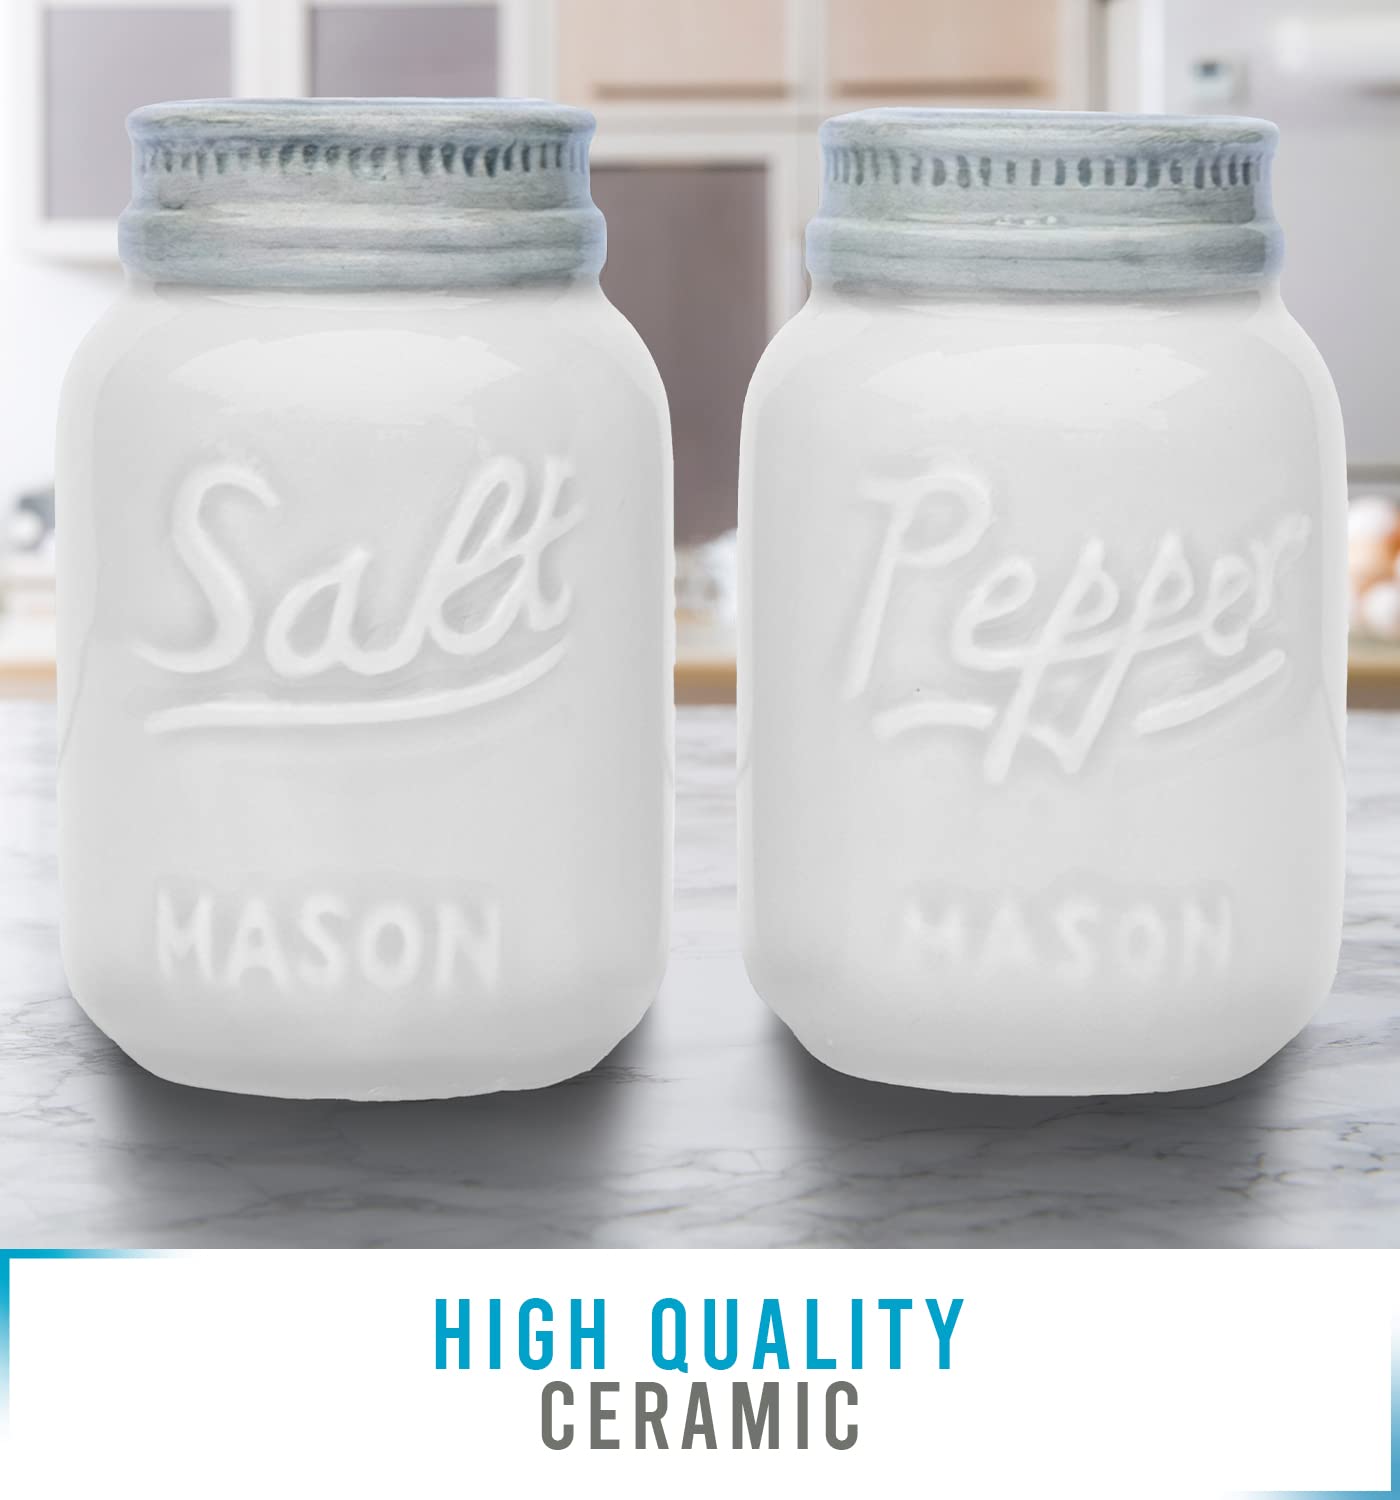 Vintage Mason Jar Salt & Pepper Shakers by Comfify - Adorable Decorative Mason Jar Décor for Vintage, Rustic, Shabby Chic Kitchens - Sturdy Ceramic in White - 3.5 oz. Cap.